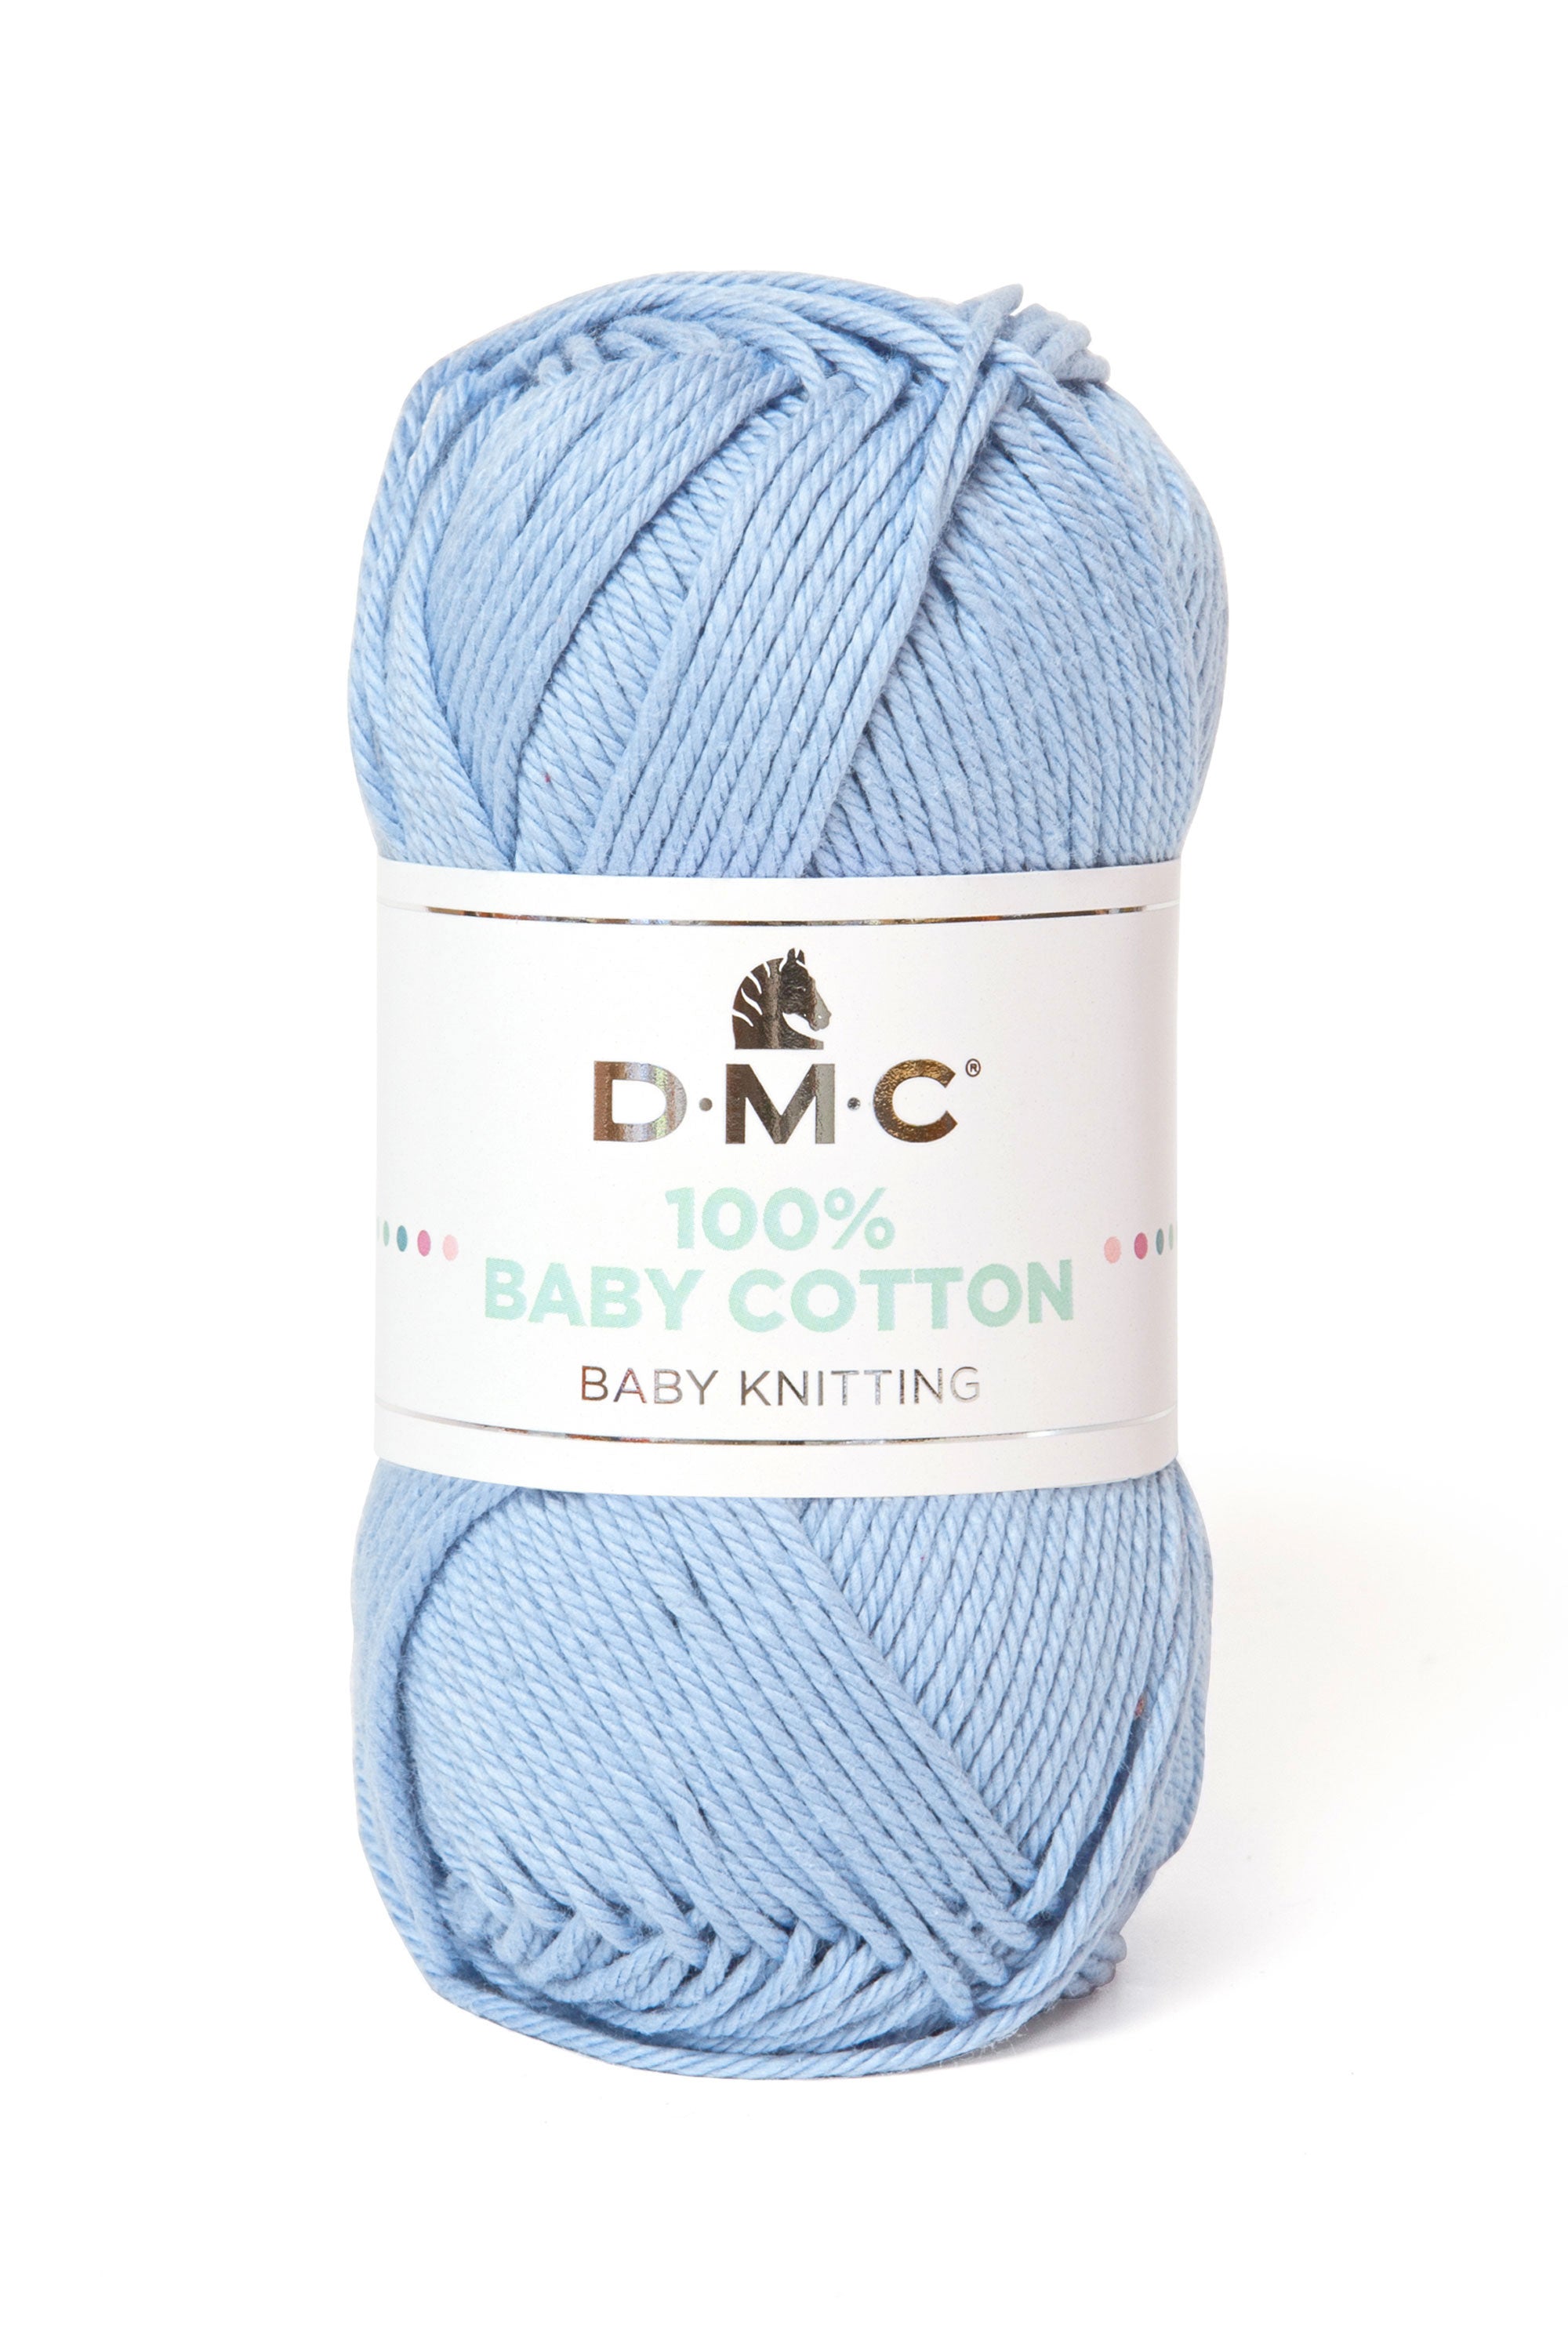 Lana Dmc 100% Baby Cotton Colore 751